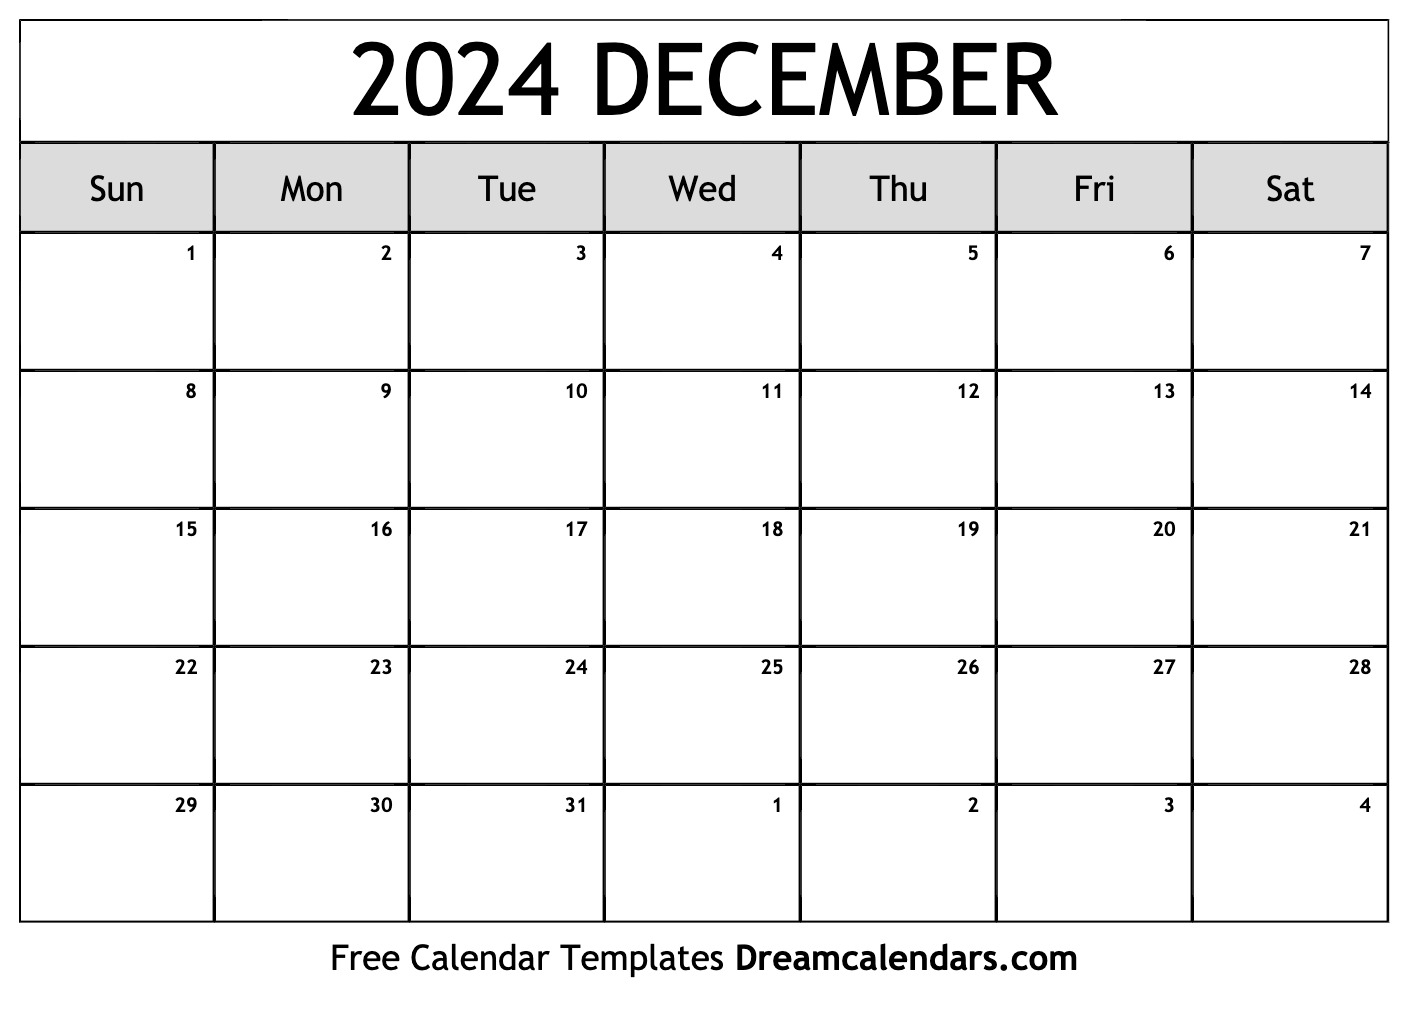 December 2024 Calendar | Free Blank Printable With Holidays for Free Printable December 2024 Calendar With Holidays